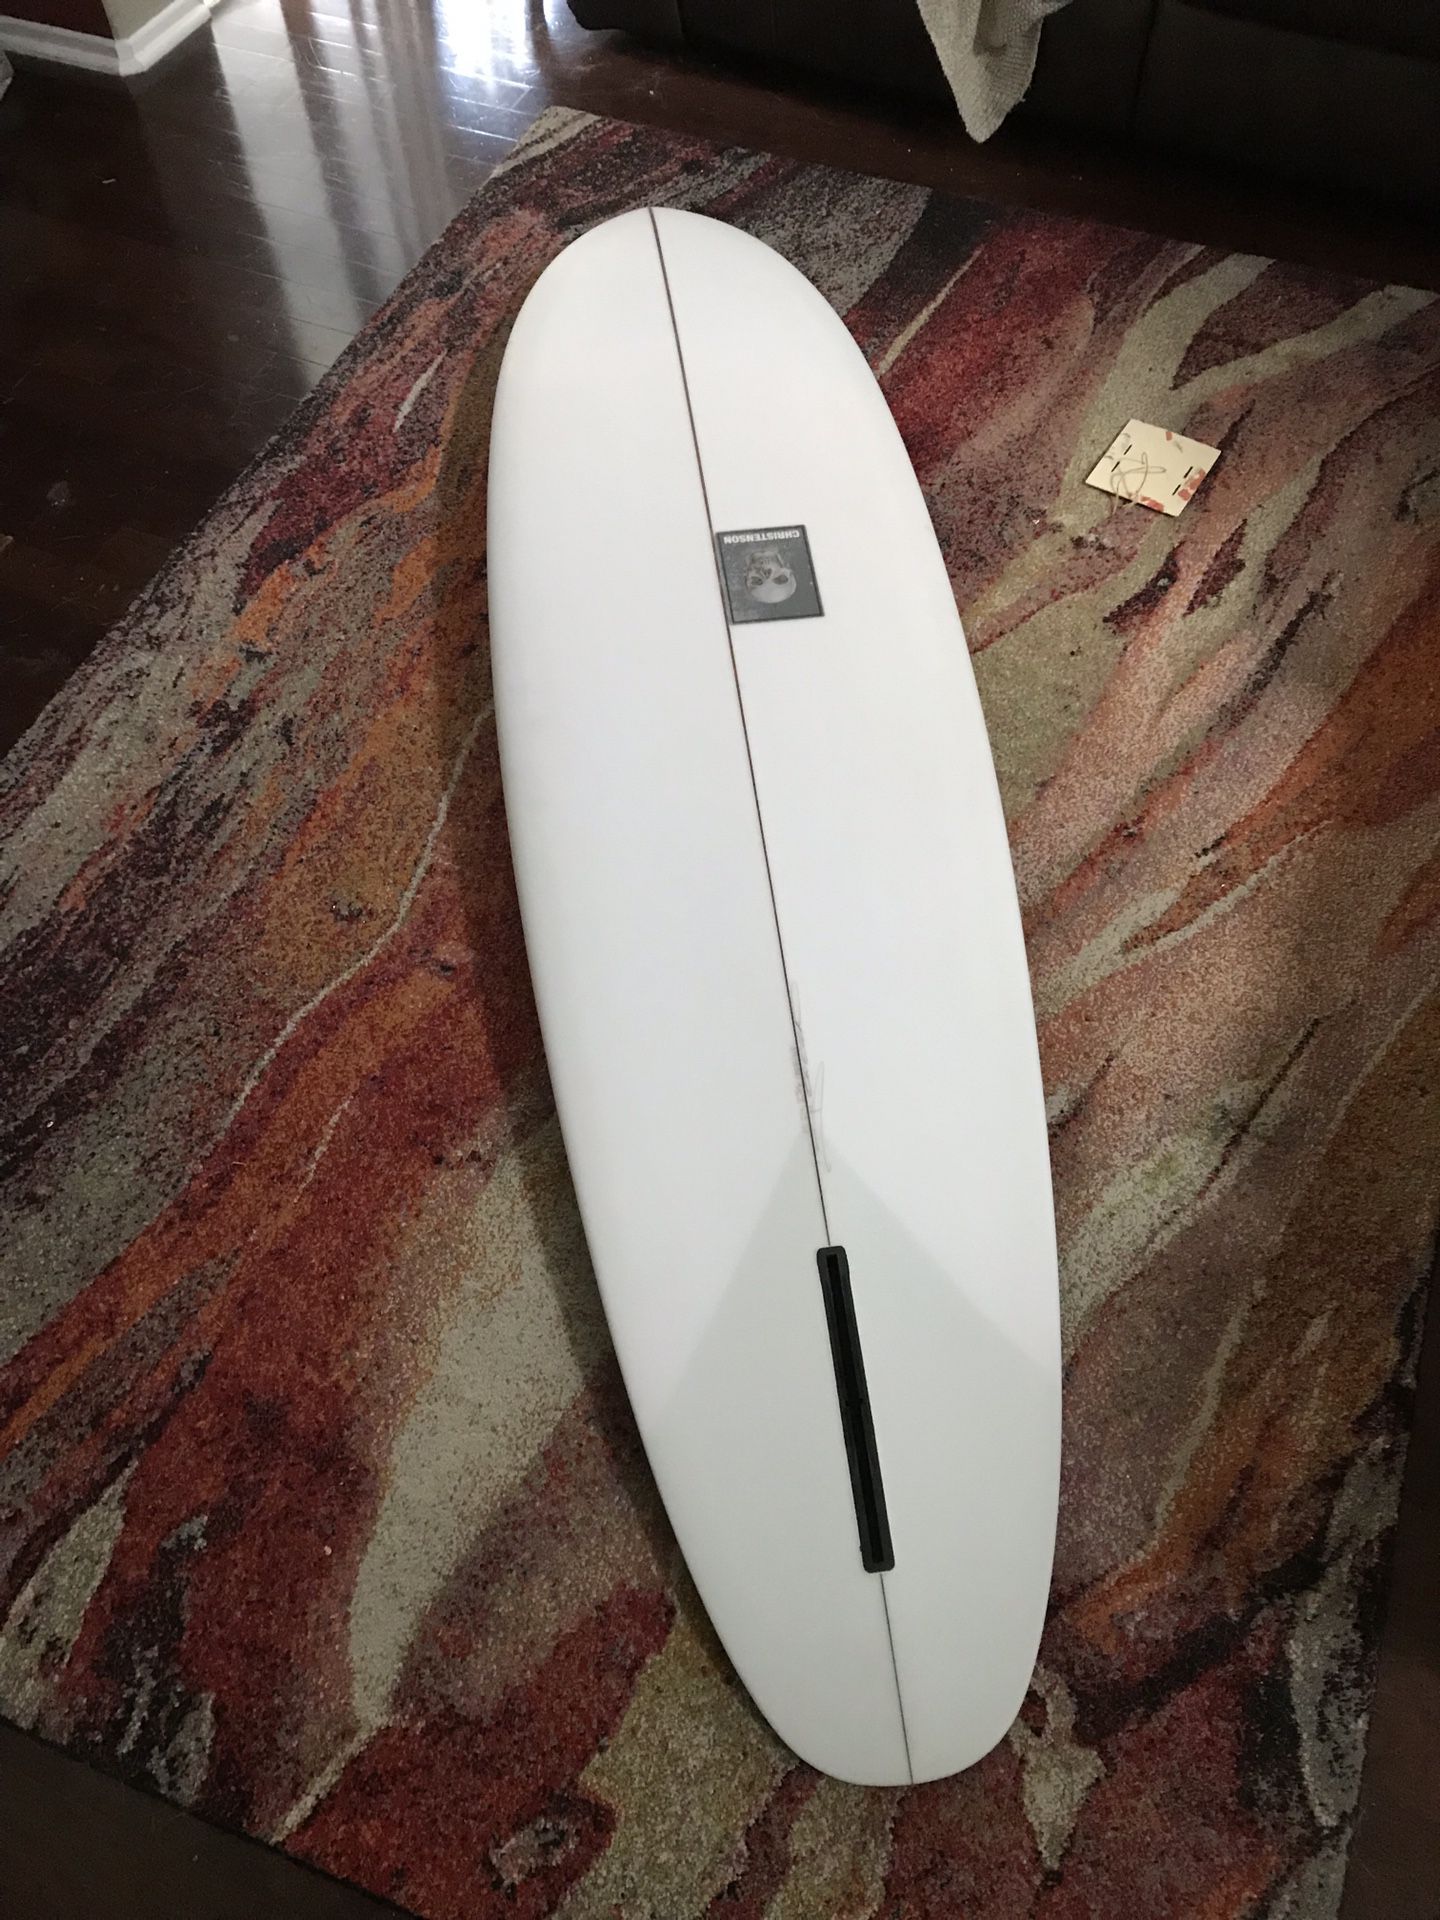 Christenson surfboard 7’0 flat tracker